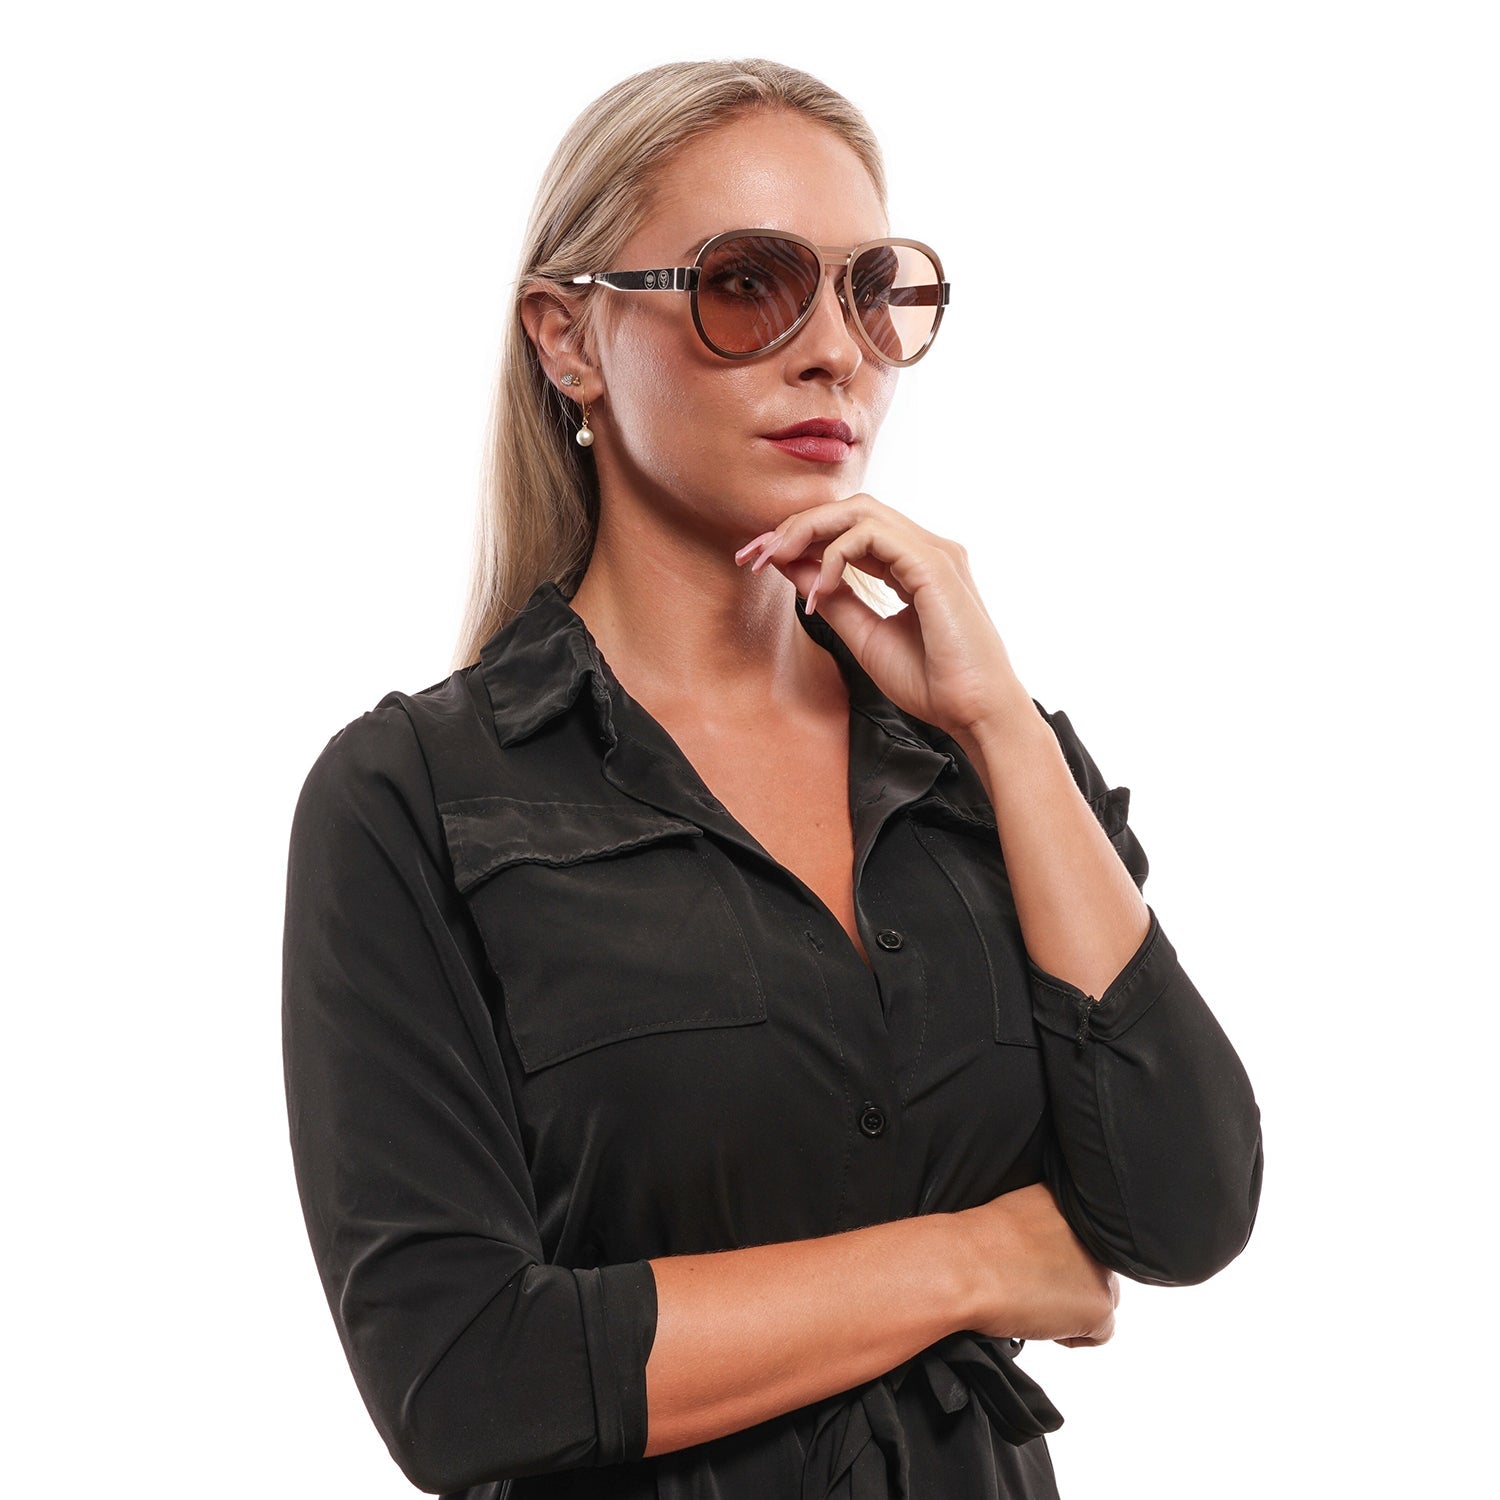 Roberto Cavalli Rose Gold Sunglasses for Woman - Fizigo